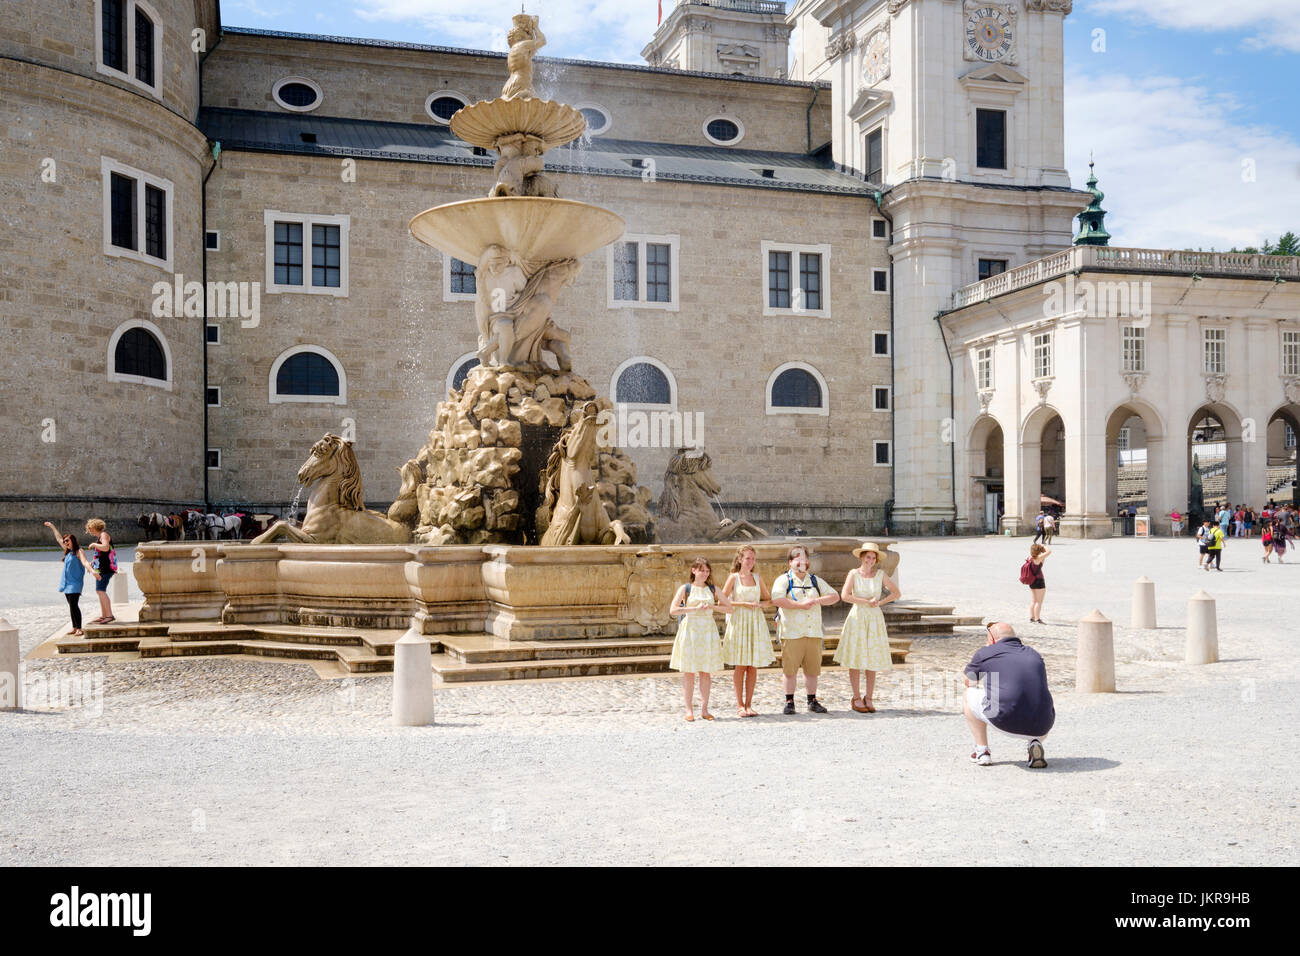 Residenzbrunnen on Residenzplatz with tourists posing in Sound of Music costumes, Salzburg, Austria Stock Photo